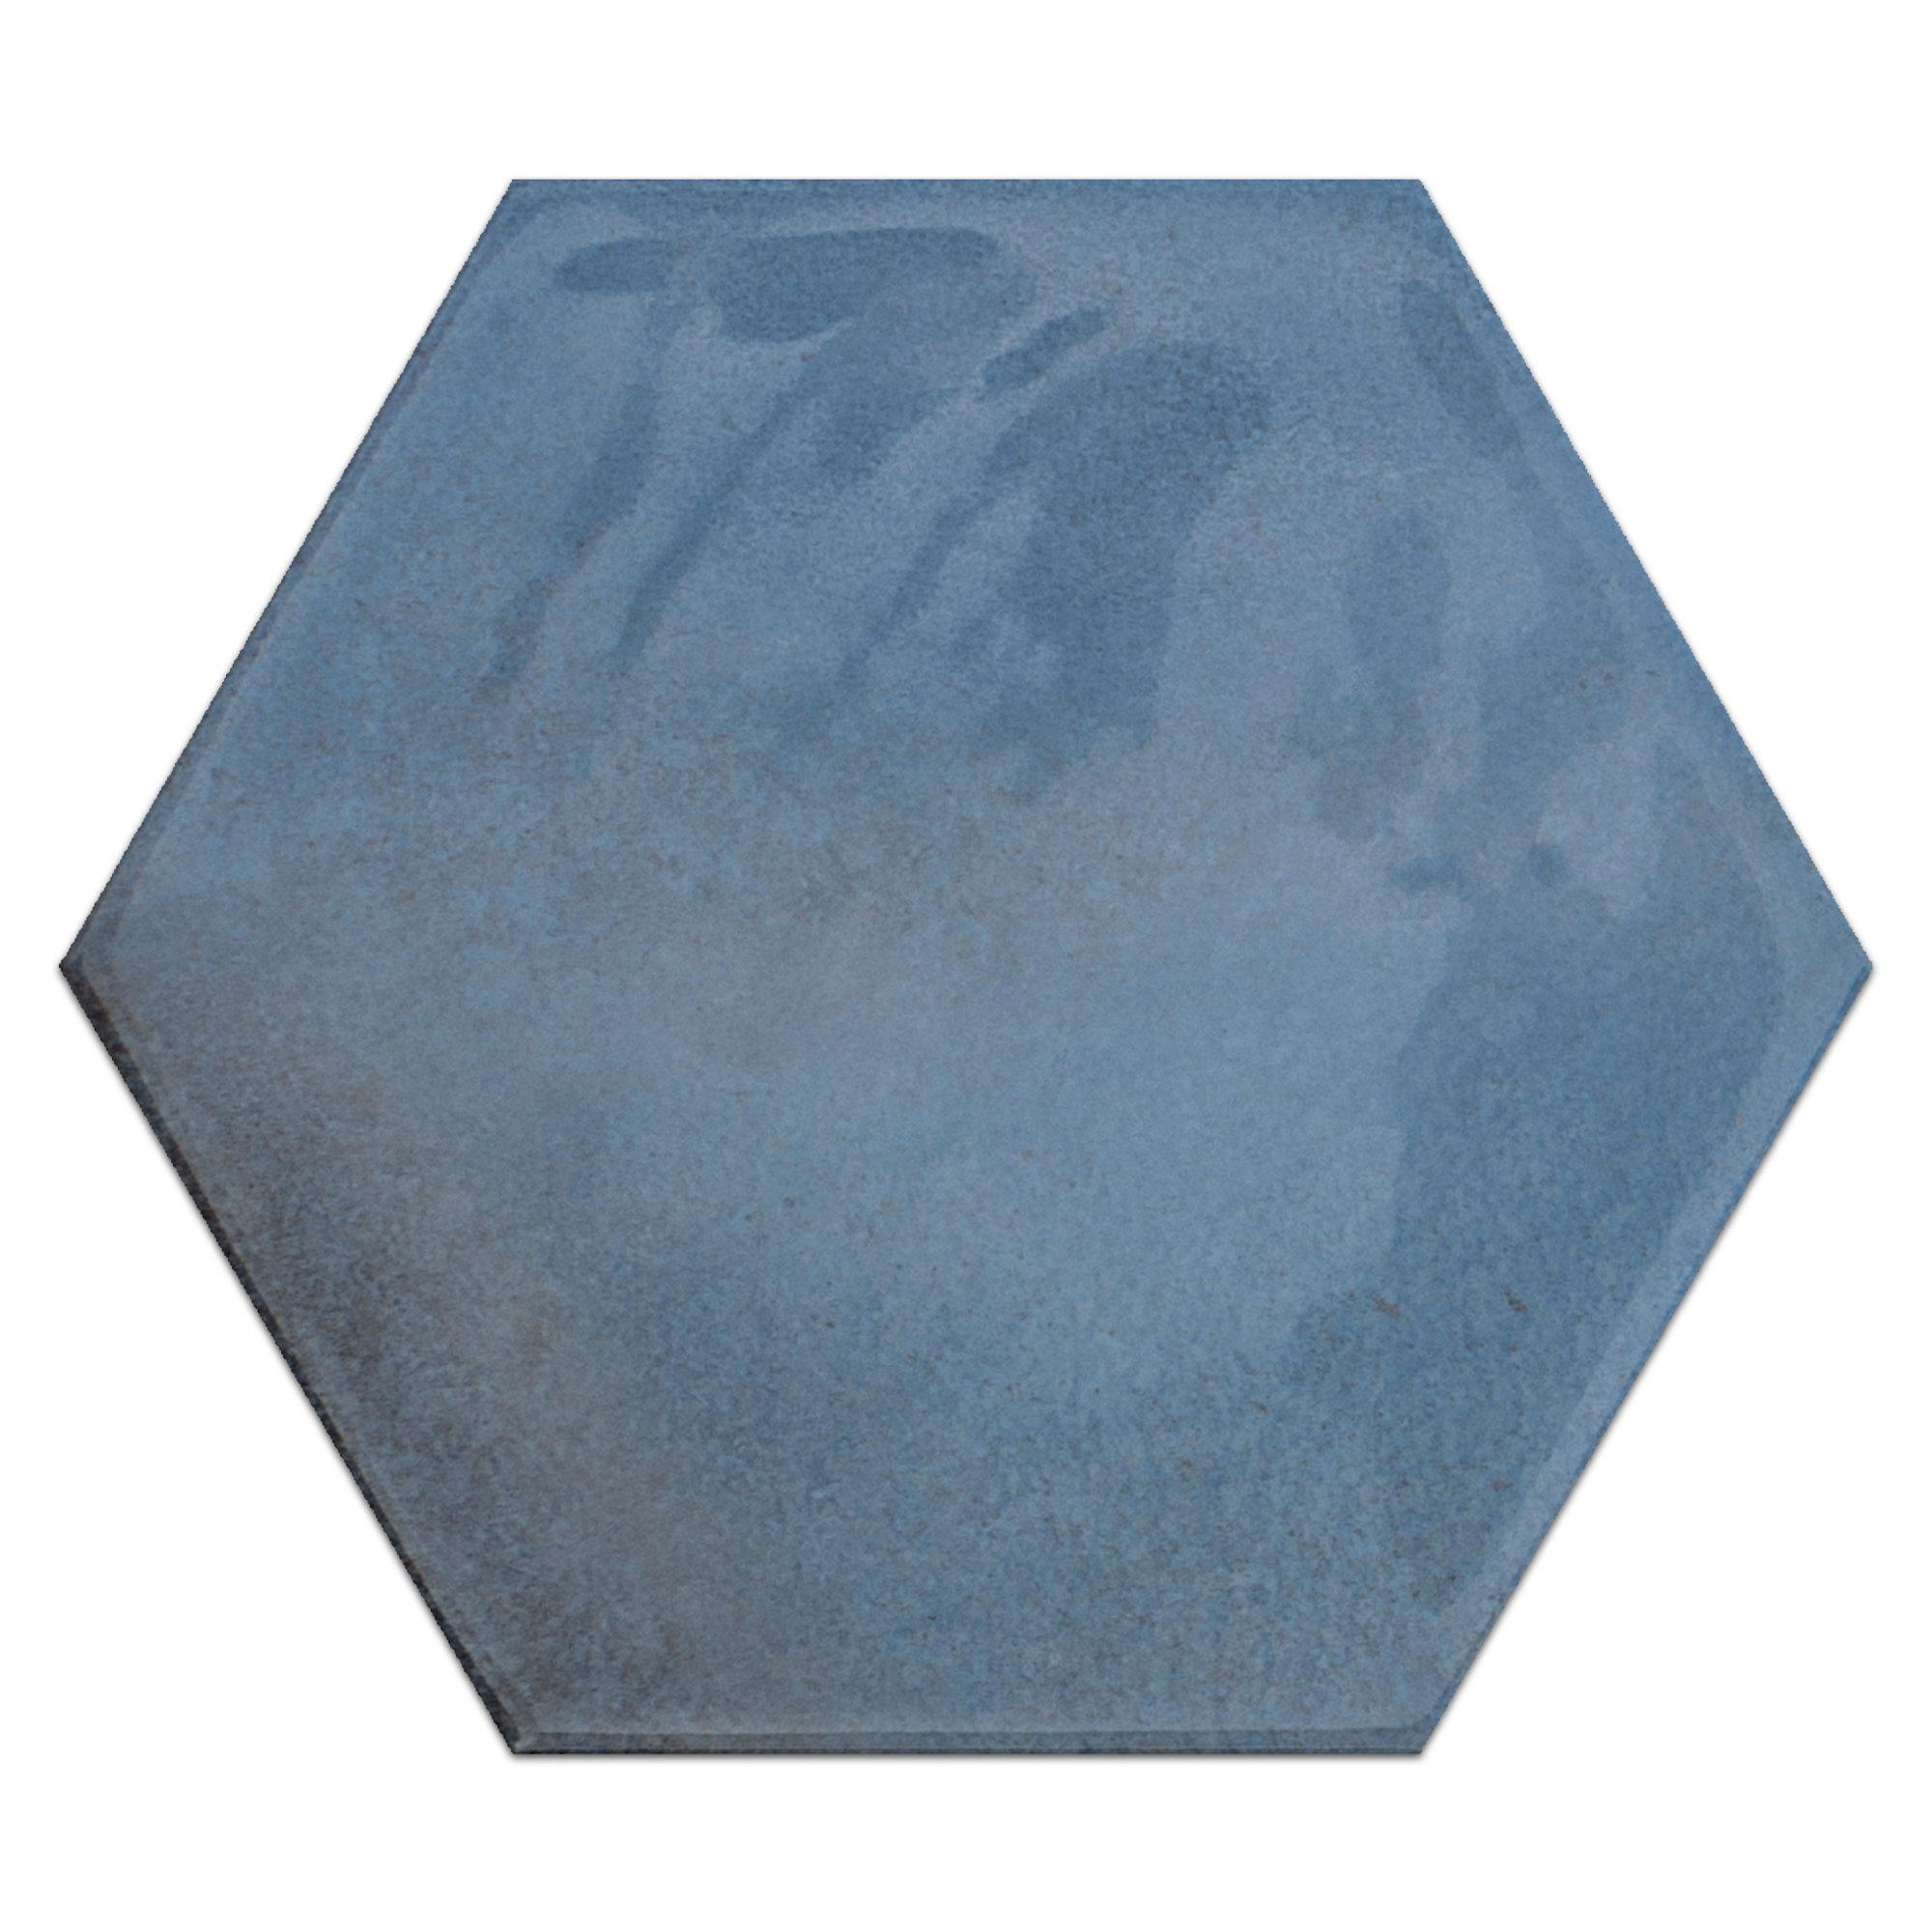 Elon Moon Blue Ceramic Hexagon Wall Tile 6.25x7.25x8.5mm Glossy CT310 Surface Group International Product